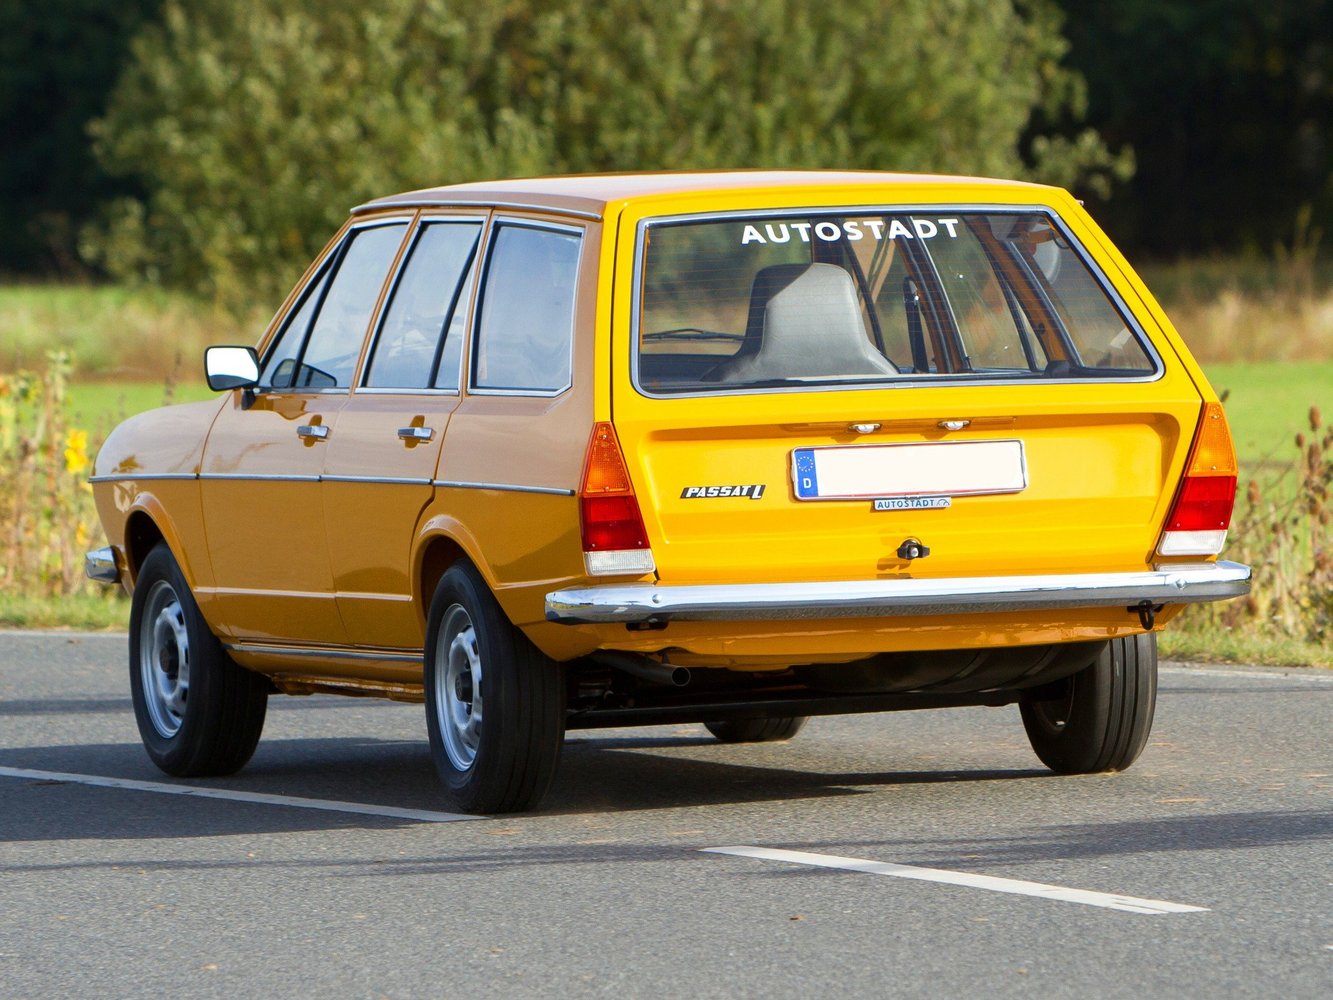 универсал Volkswagen Passat 1973 - 1980г выпуска модификация 1.3 MT (55 л.с.)